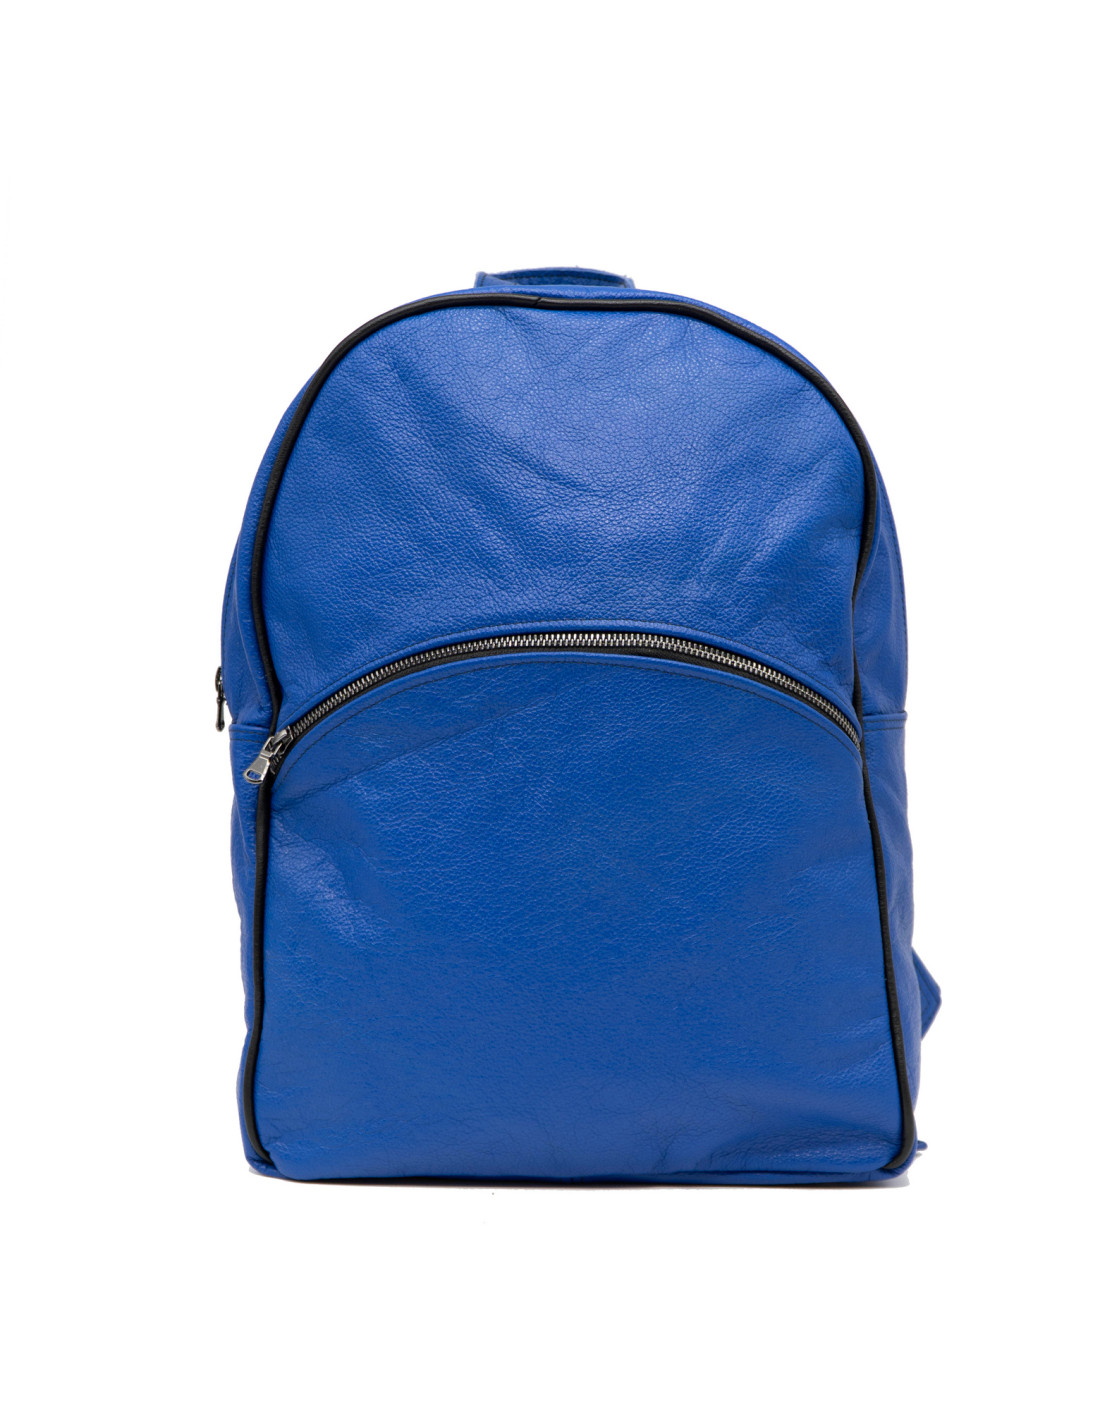 Lisbona - Backpack in Genuine Electric Blue Leather - LEATHER BACKPACKS ...